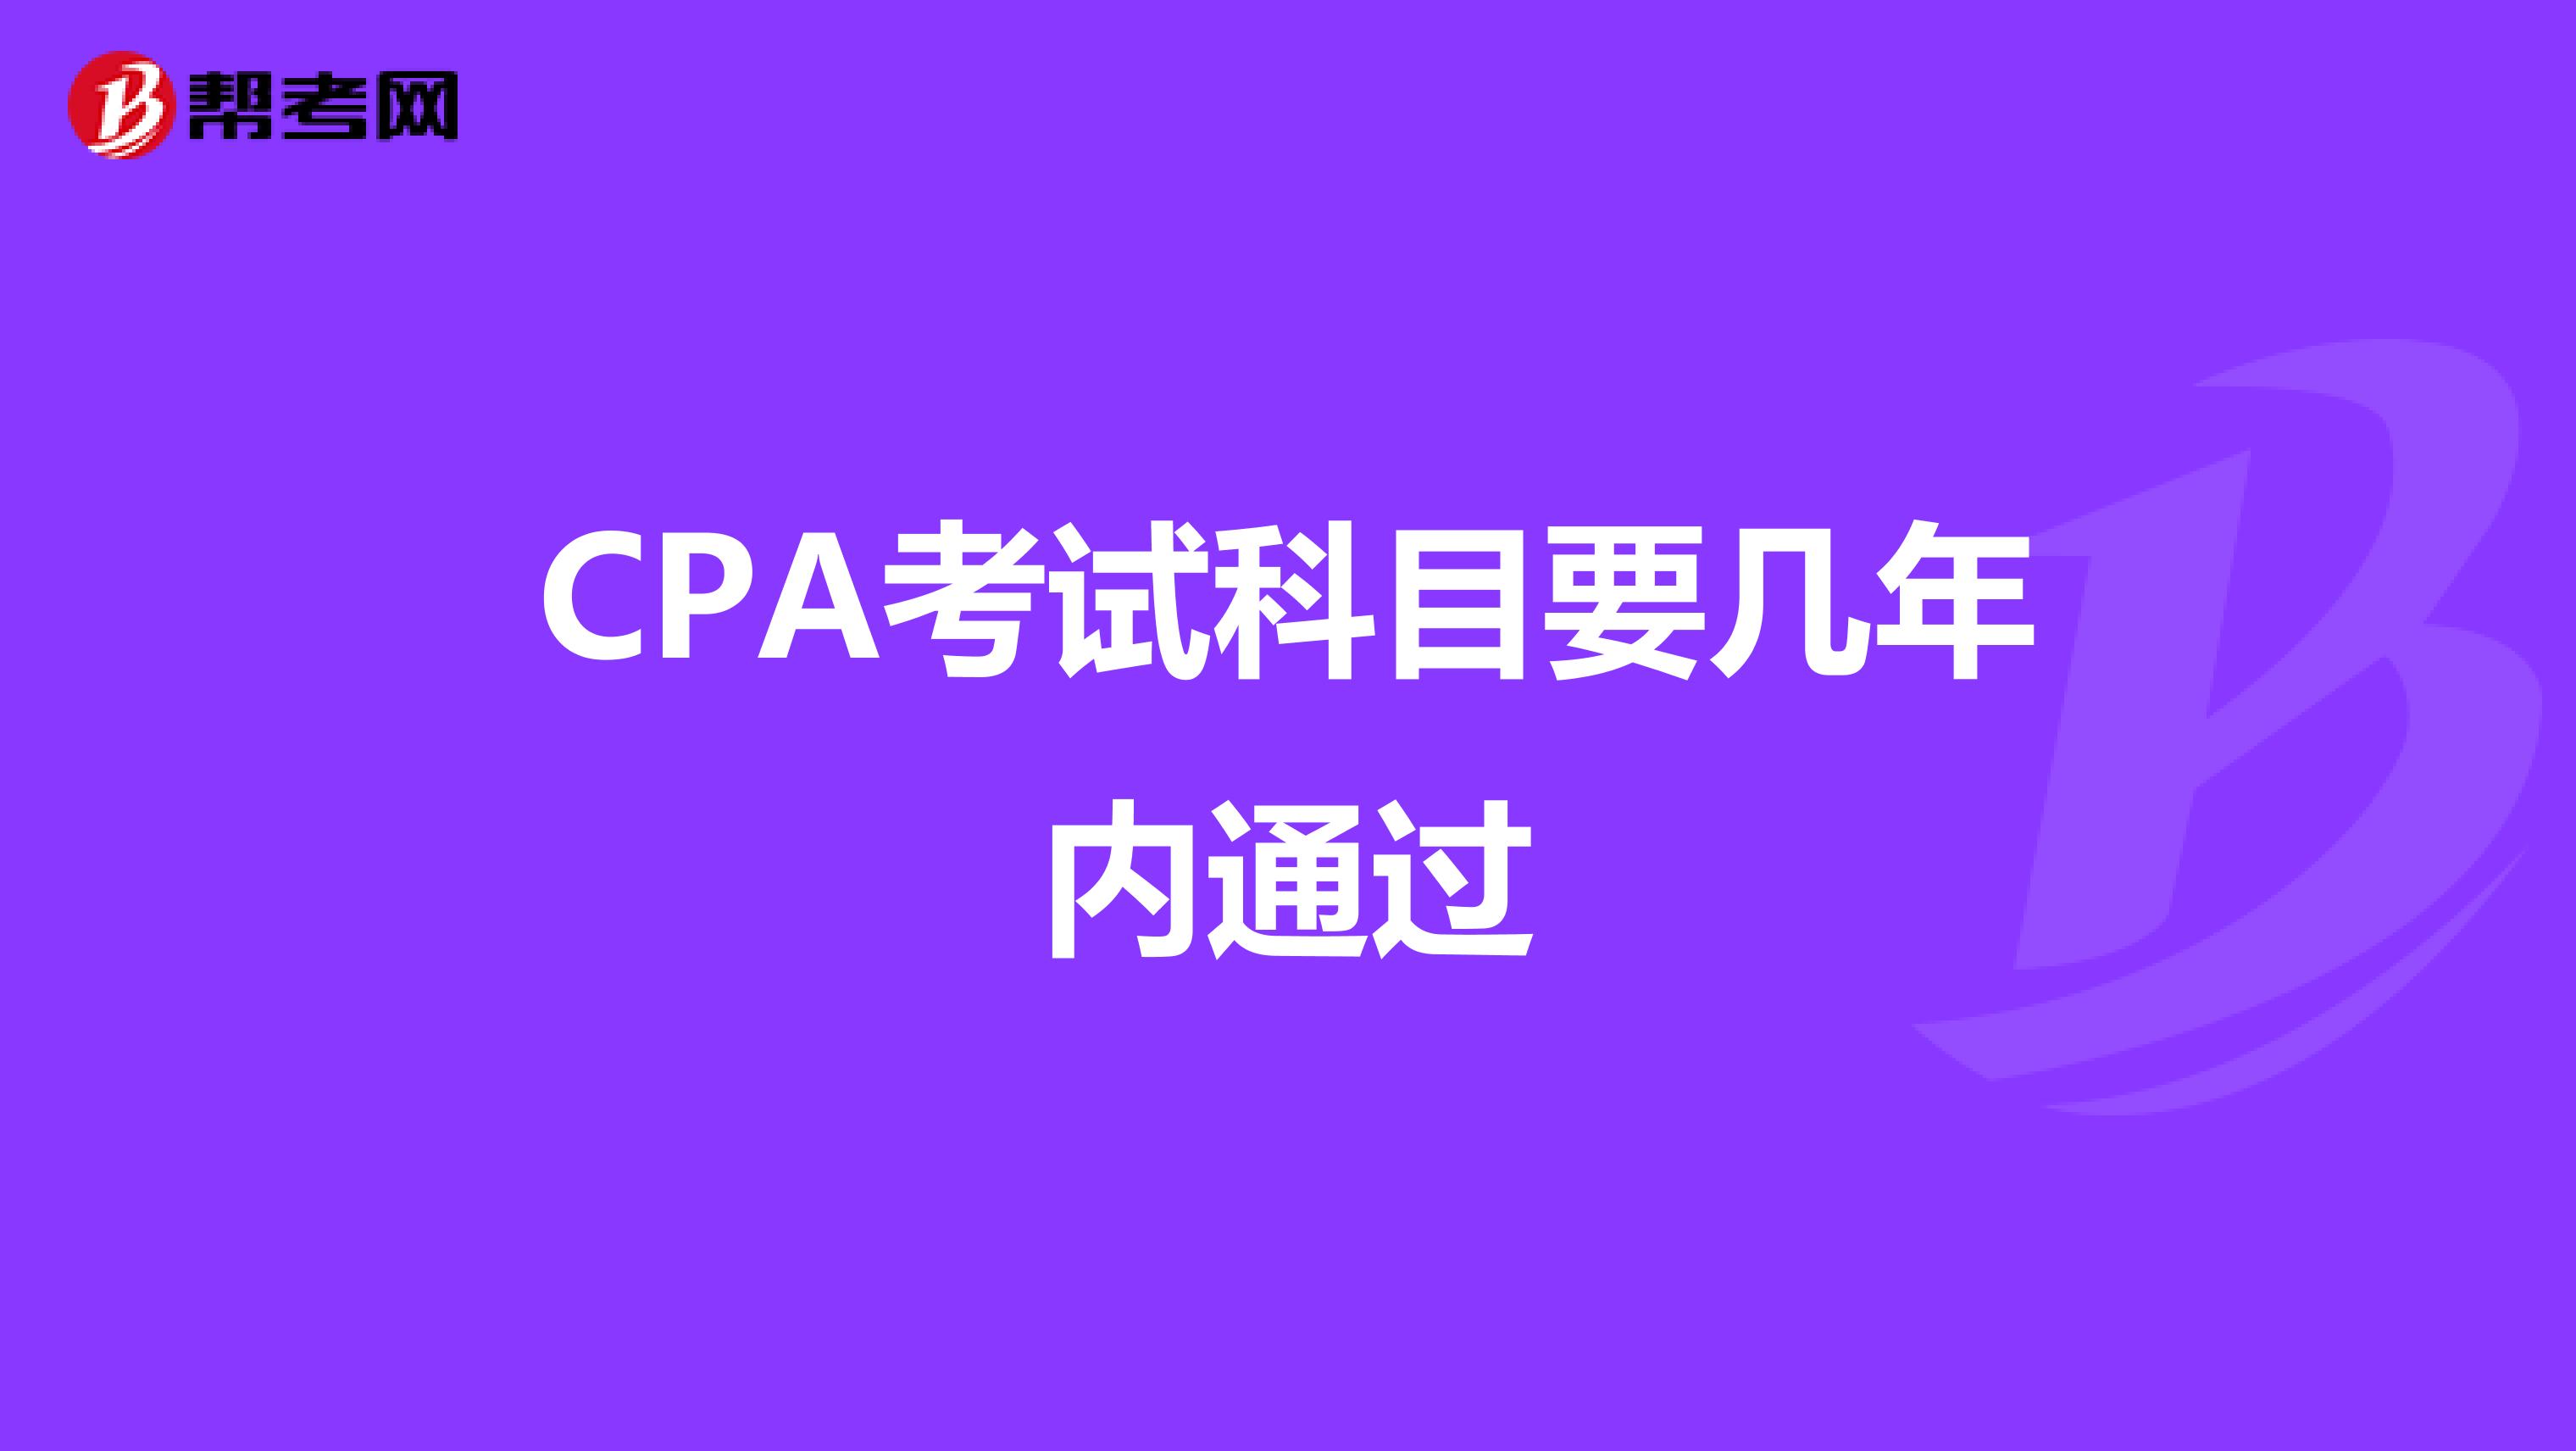 CPA考试科目要几年内通过